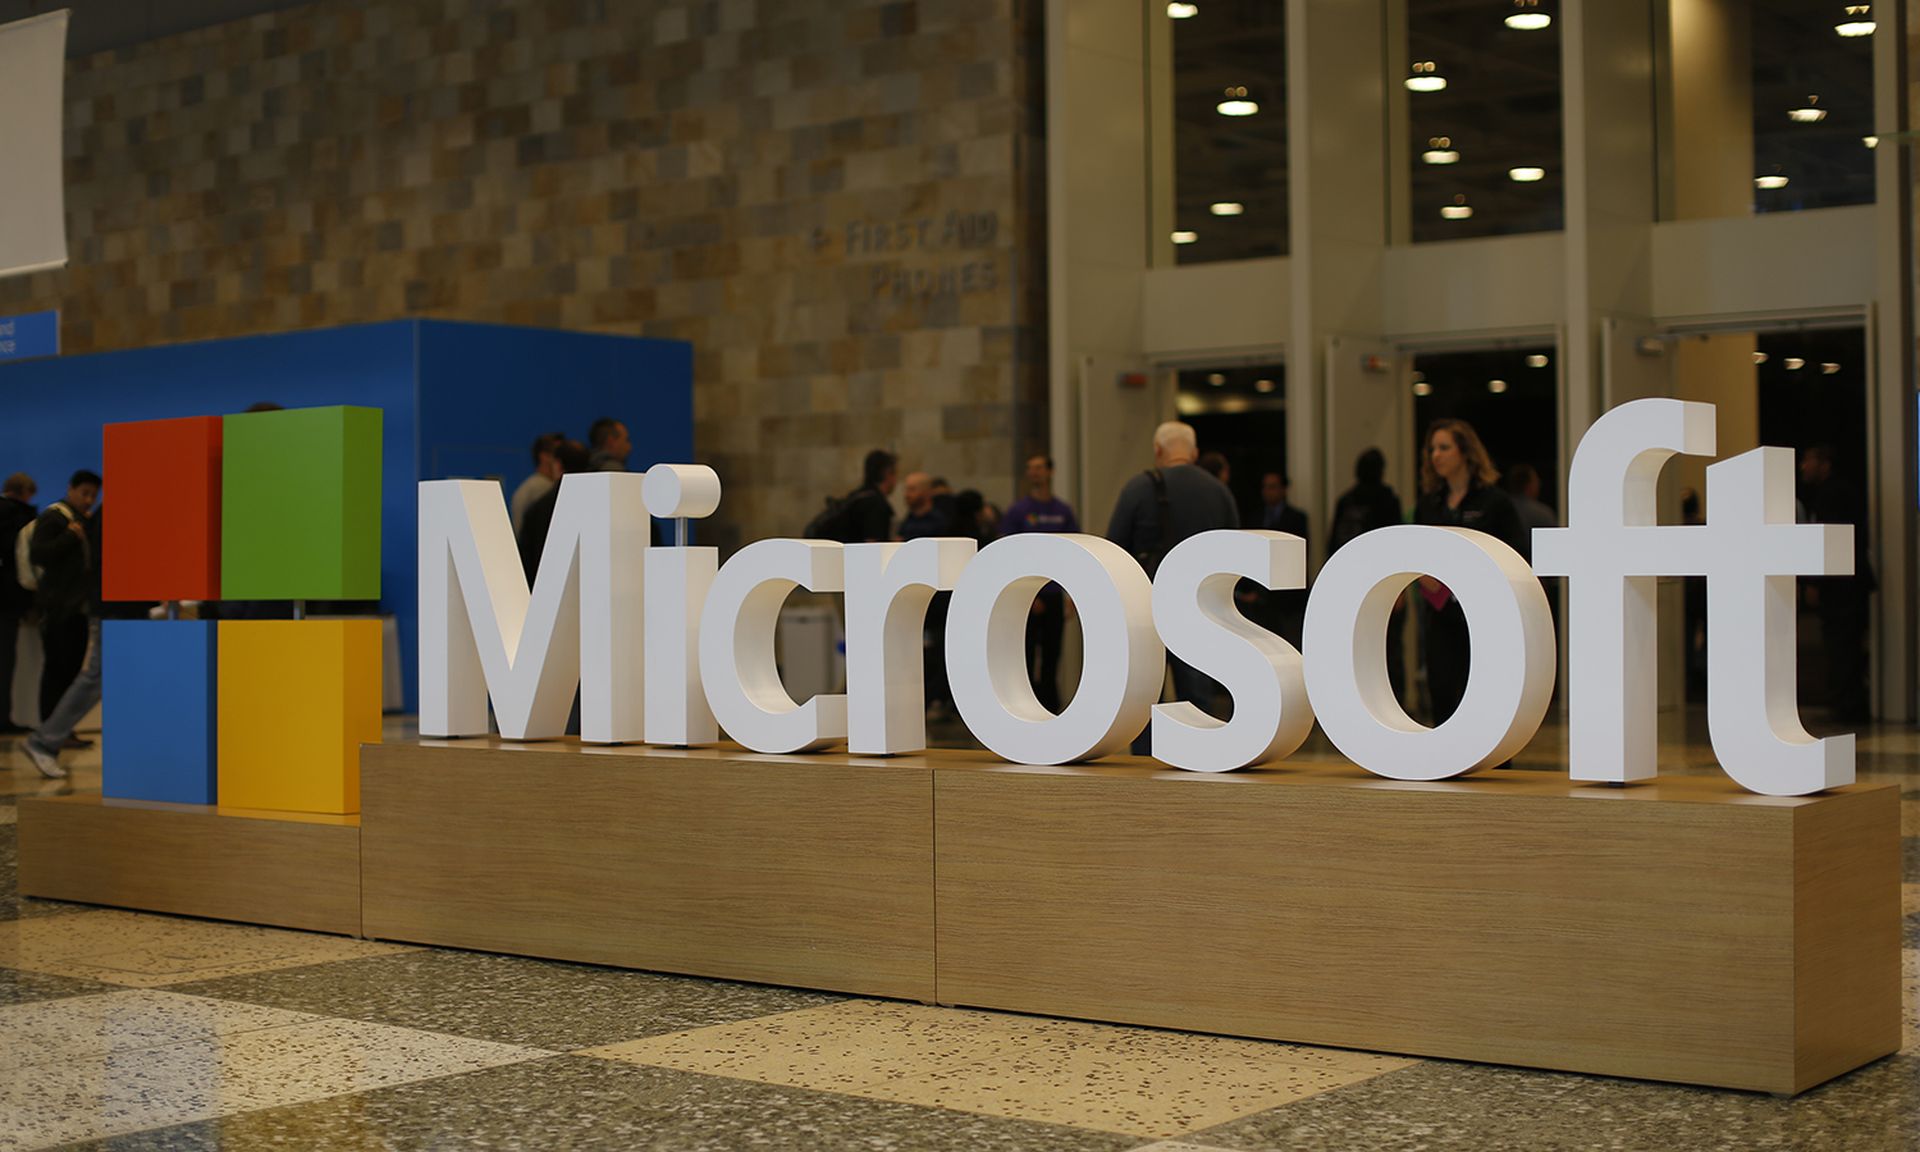 A Microsoft logo is seen